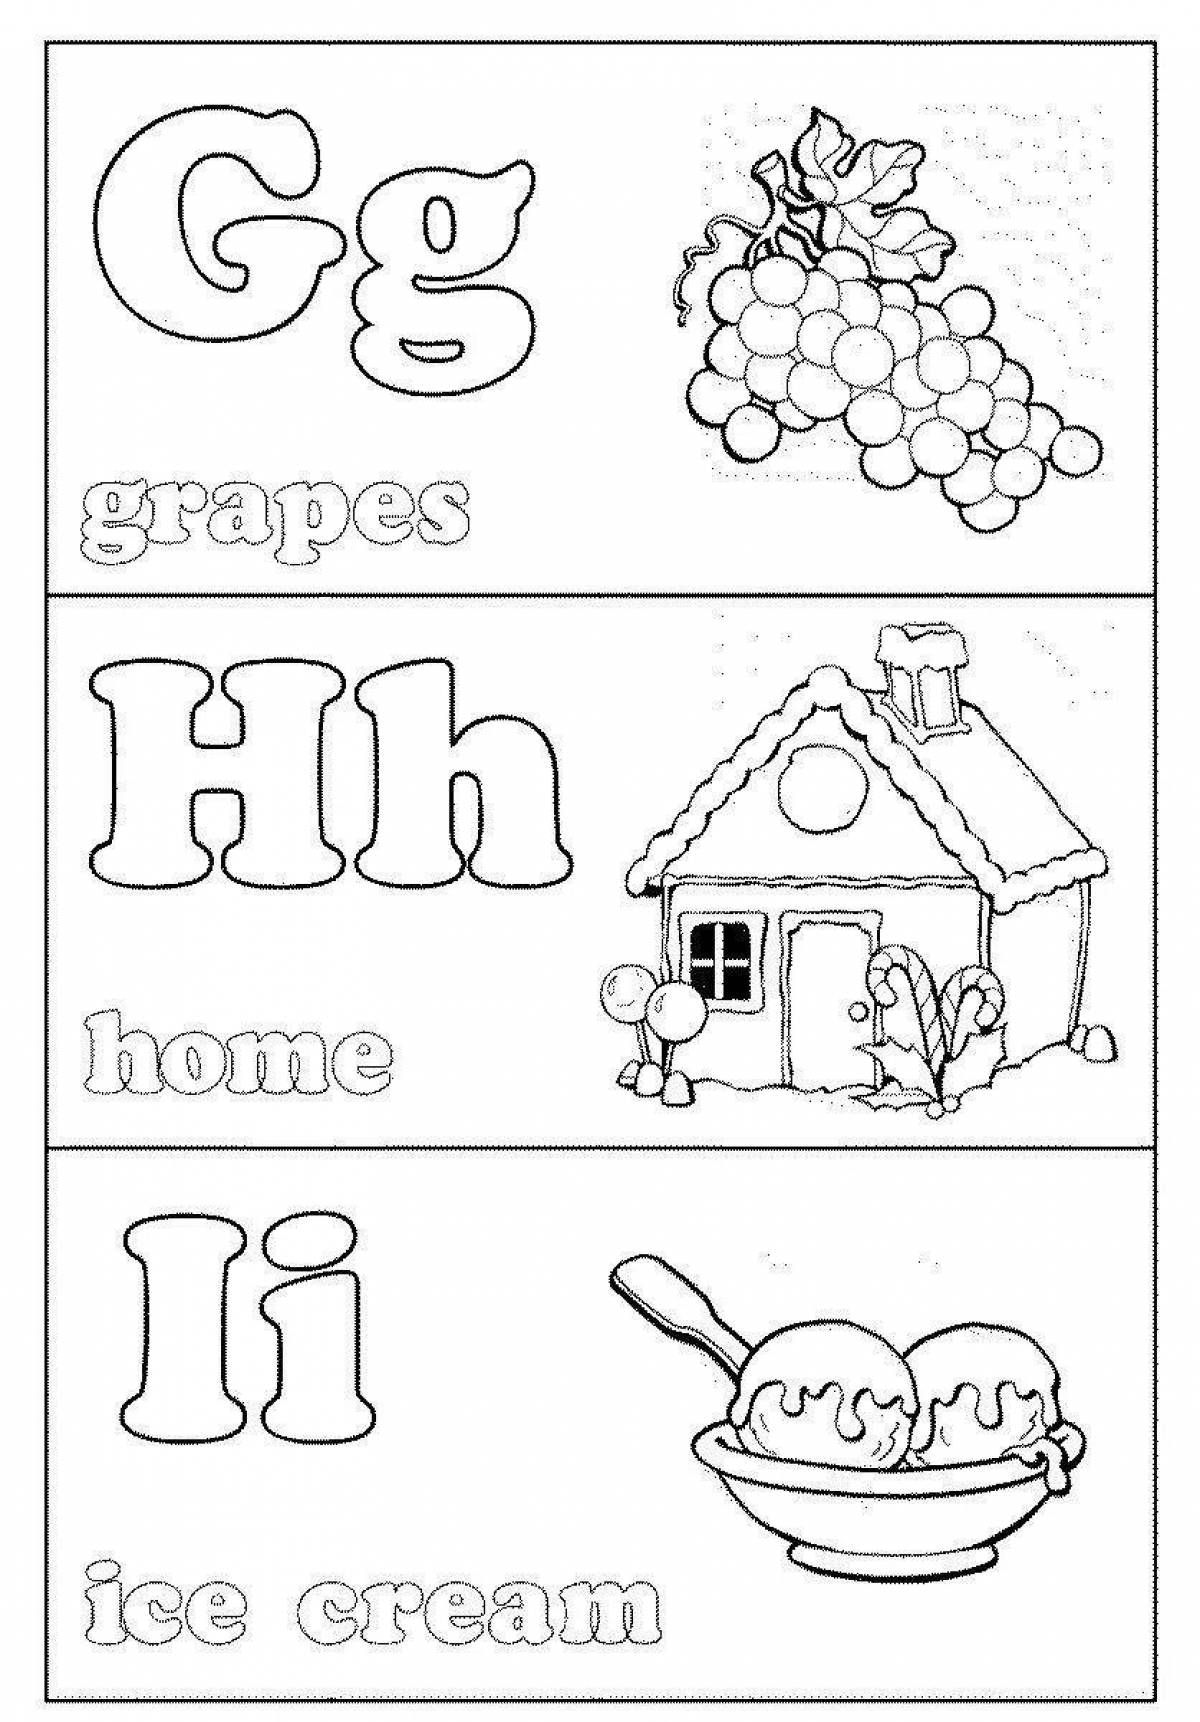 2nd grade english alphabet coloring inspirational